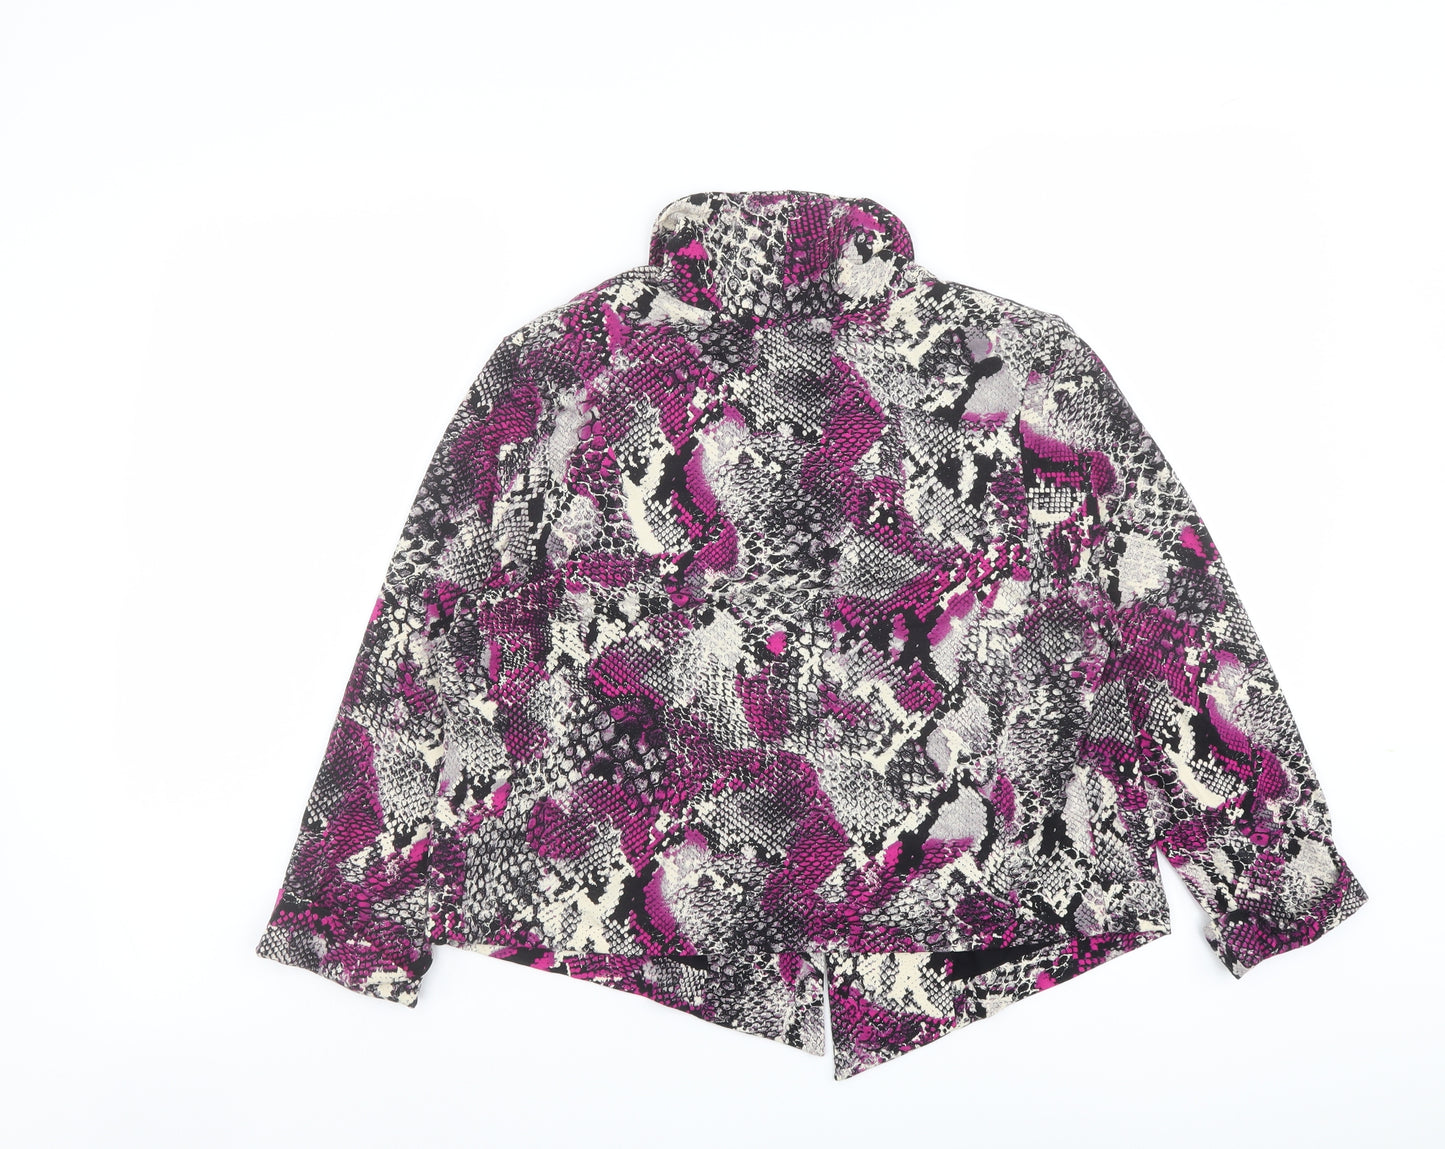 Marks and Spencer Womens Purple Animal Print Jacket Size 14 - Snake Print